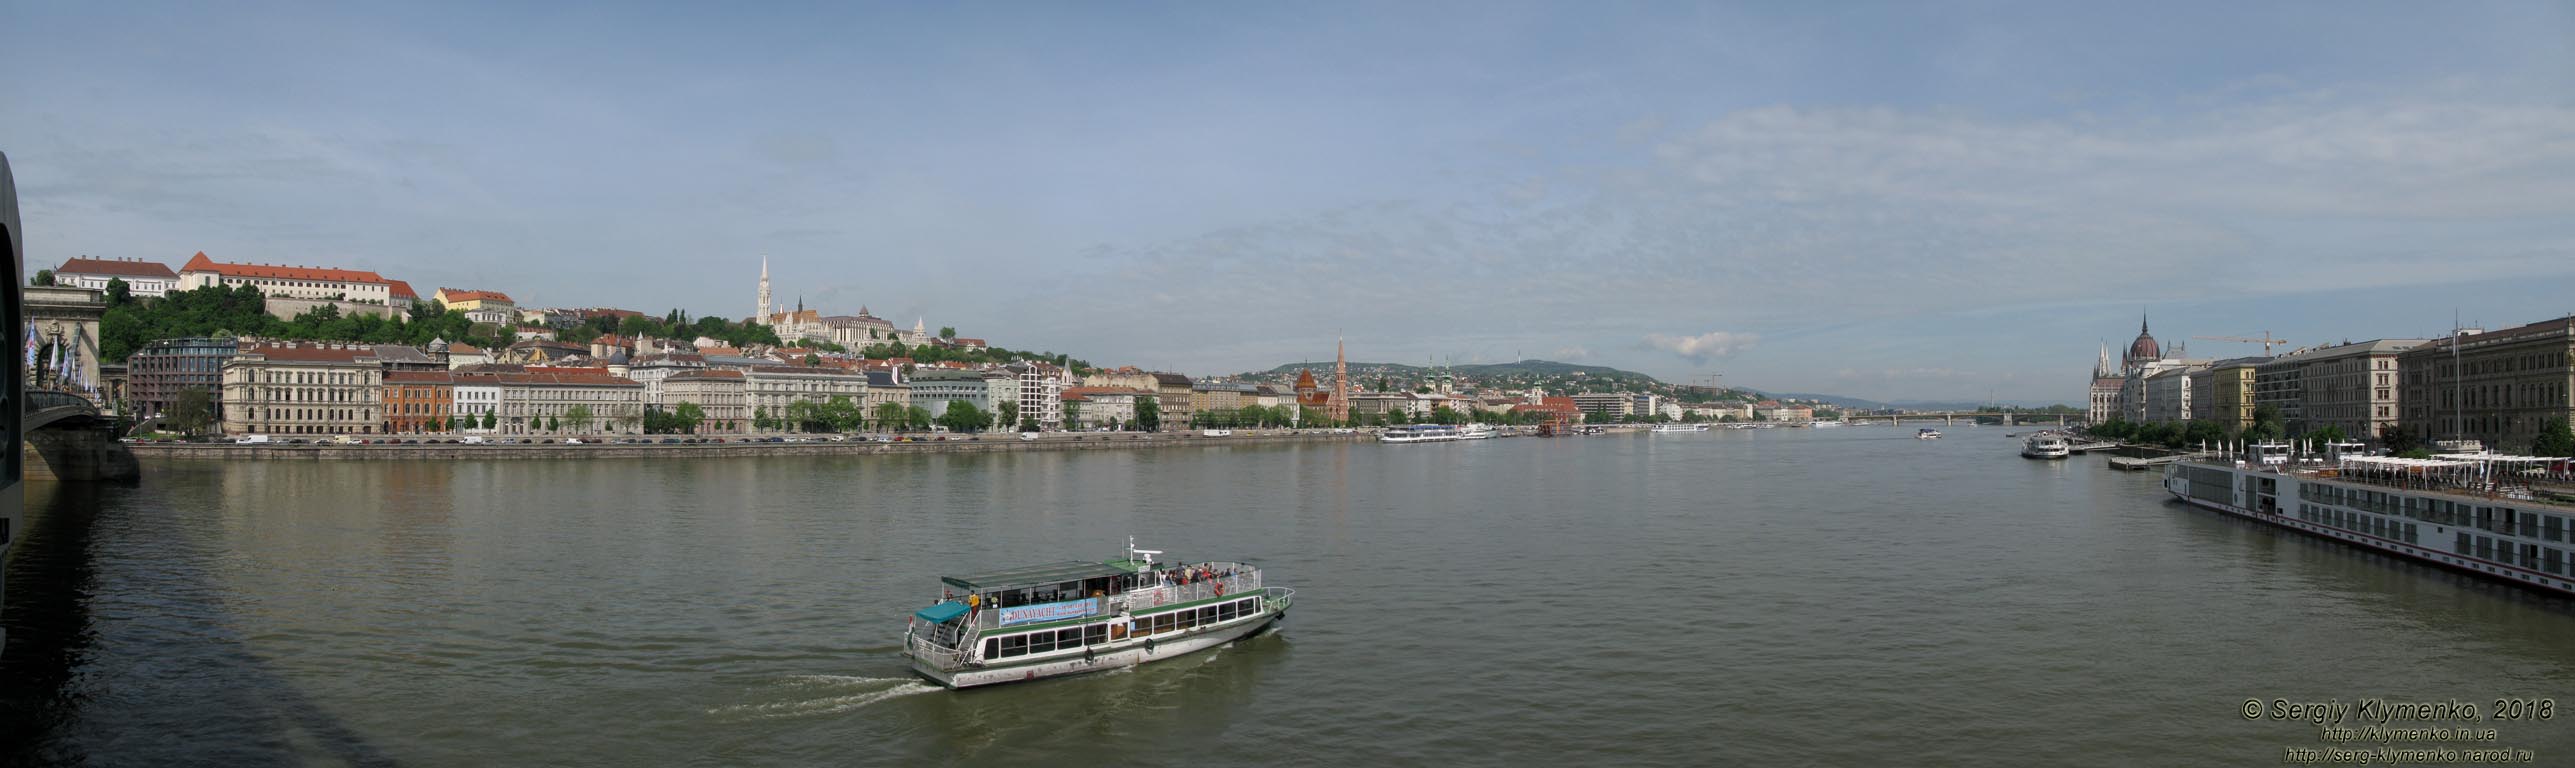 Будапешт (Budapest), Венгрия (Magyarország). Фото. Вид с Цепного моста Сеченьи (Széchenyi lánchíd). Панорама ~150°.